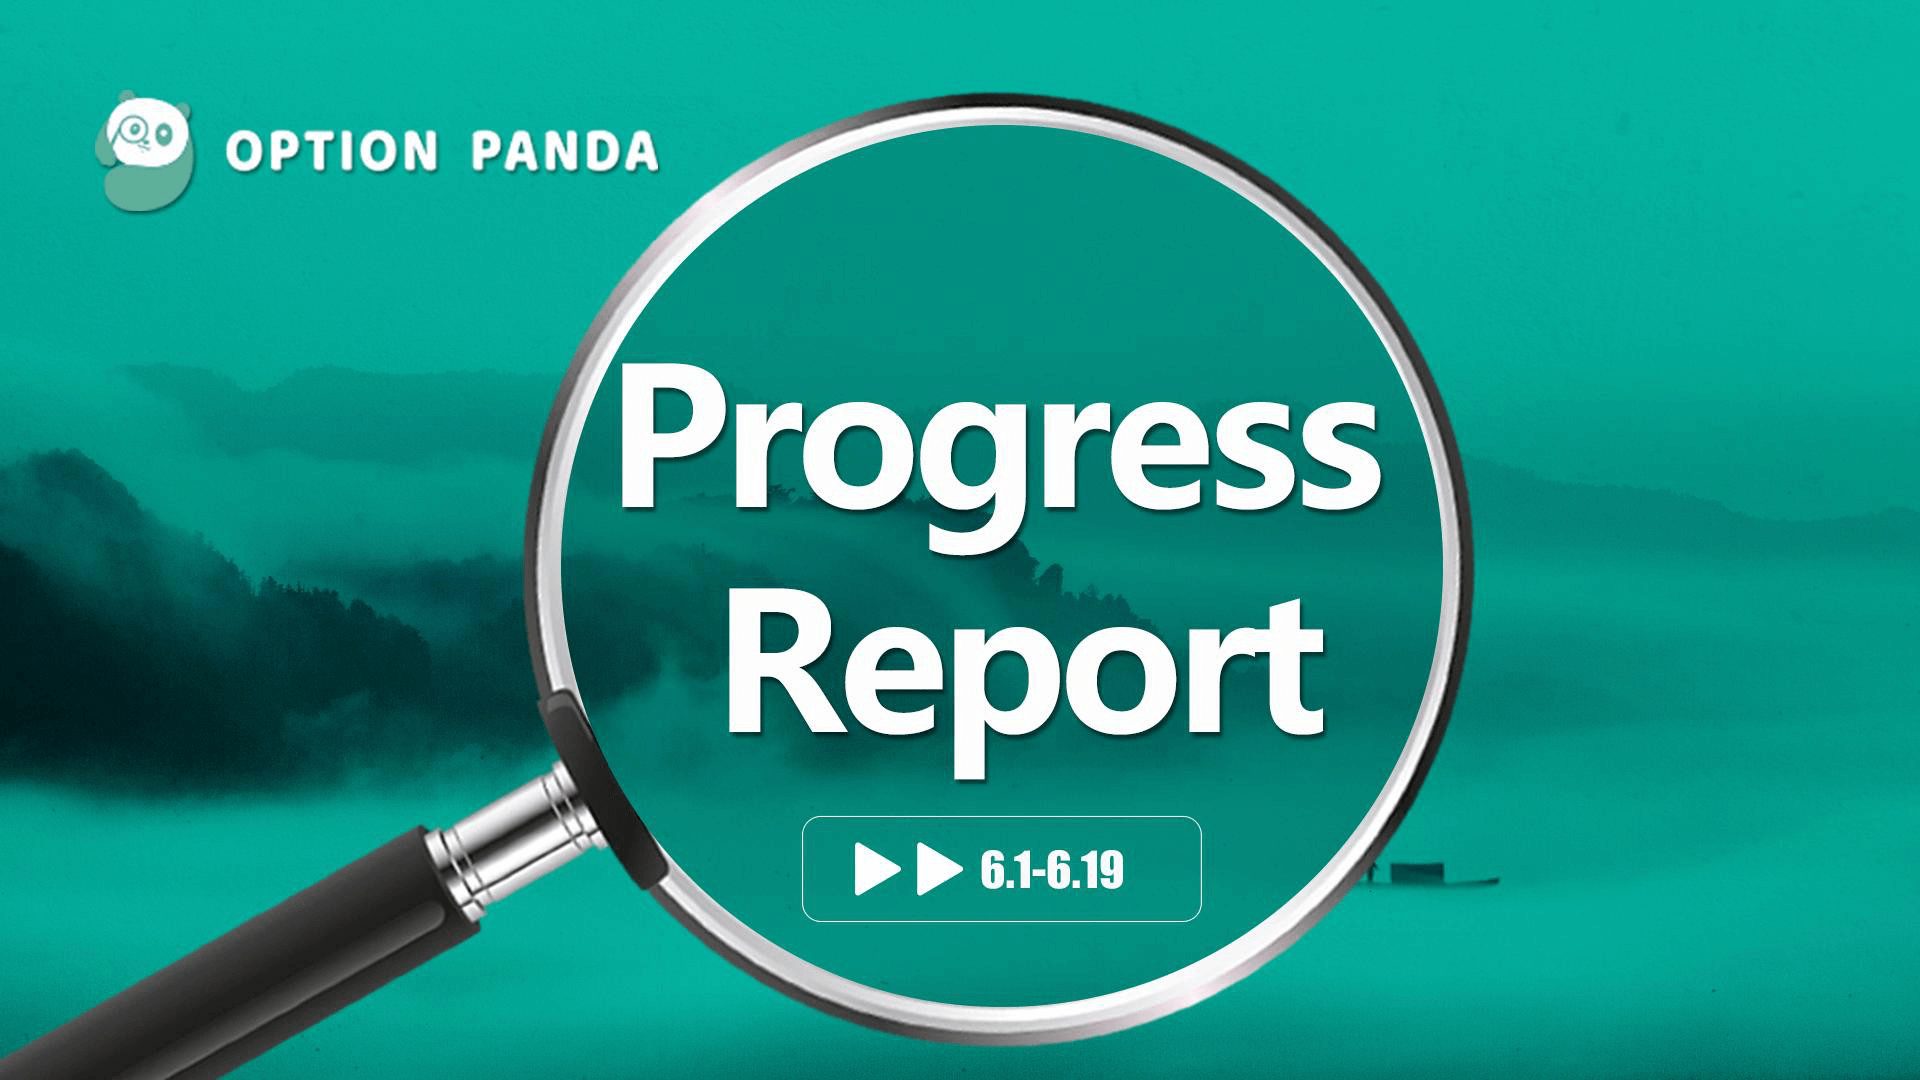 OptionPanda Progress Report | June 1- June 19